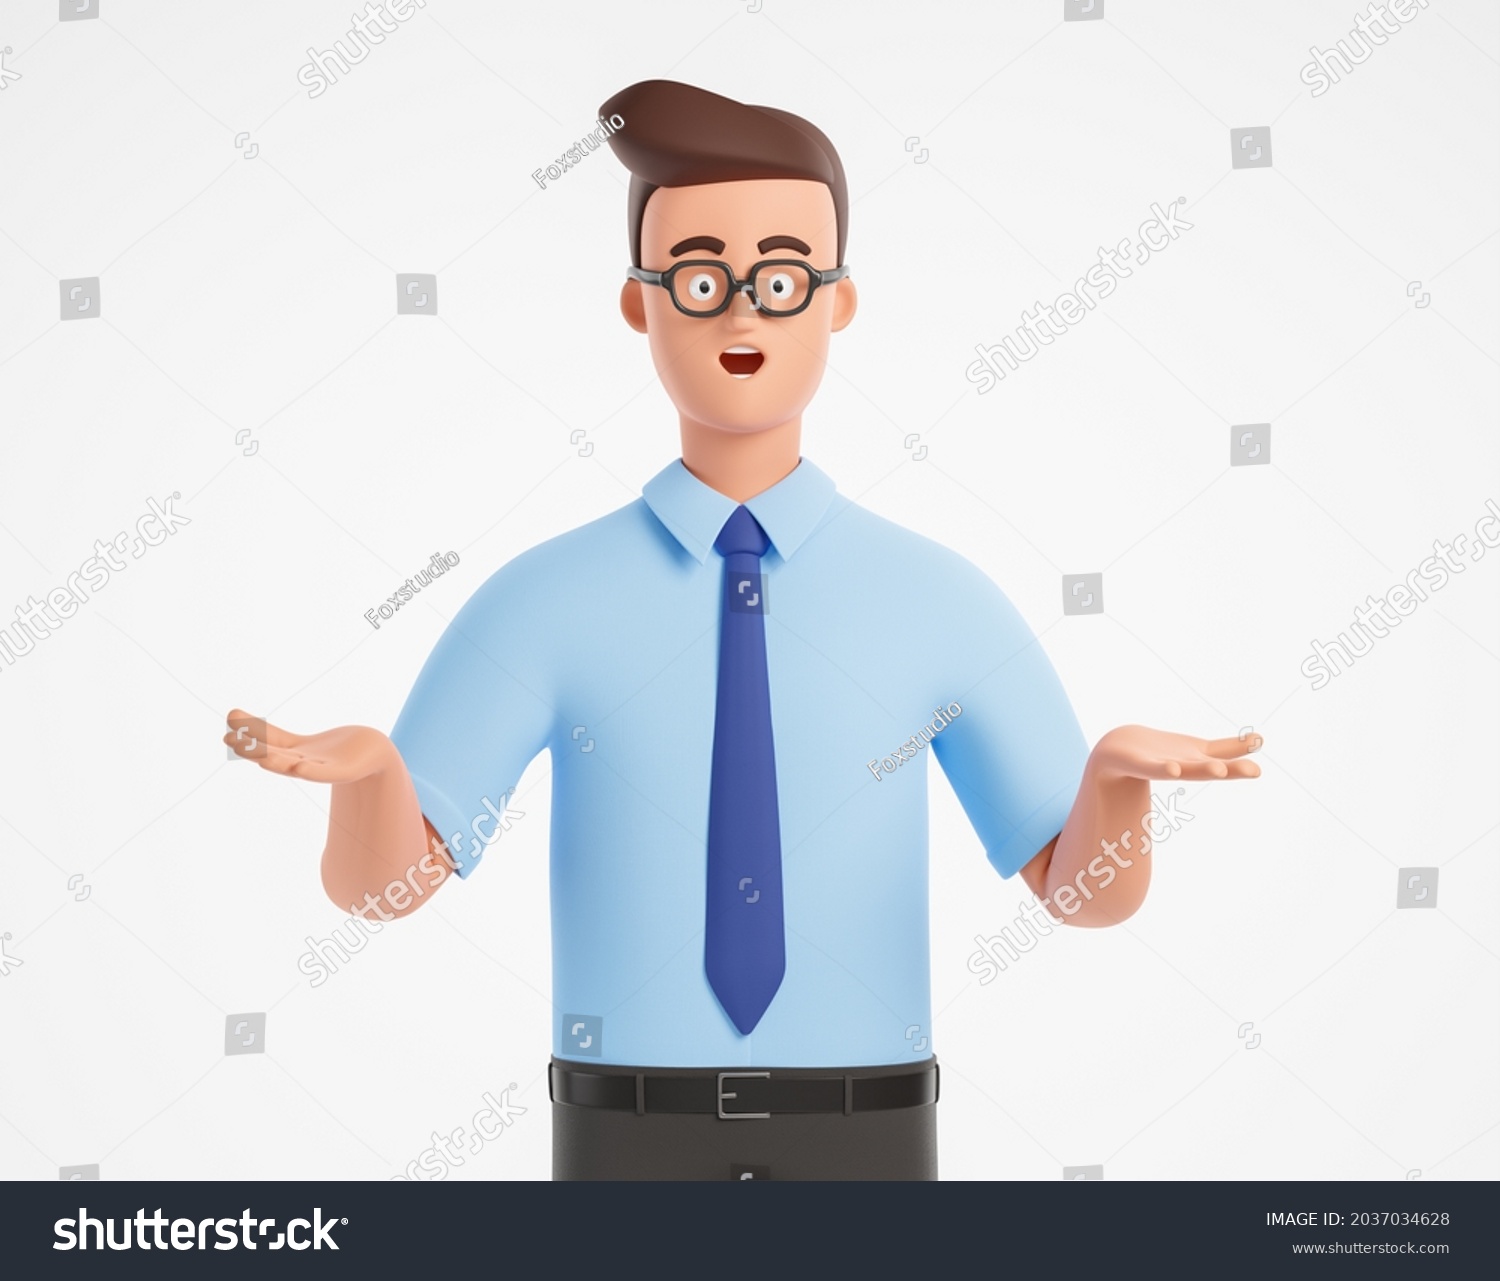 Happy Surprised Cartoon Businessman Character Glasses Stock